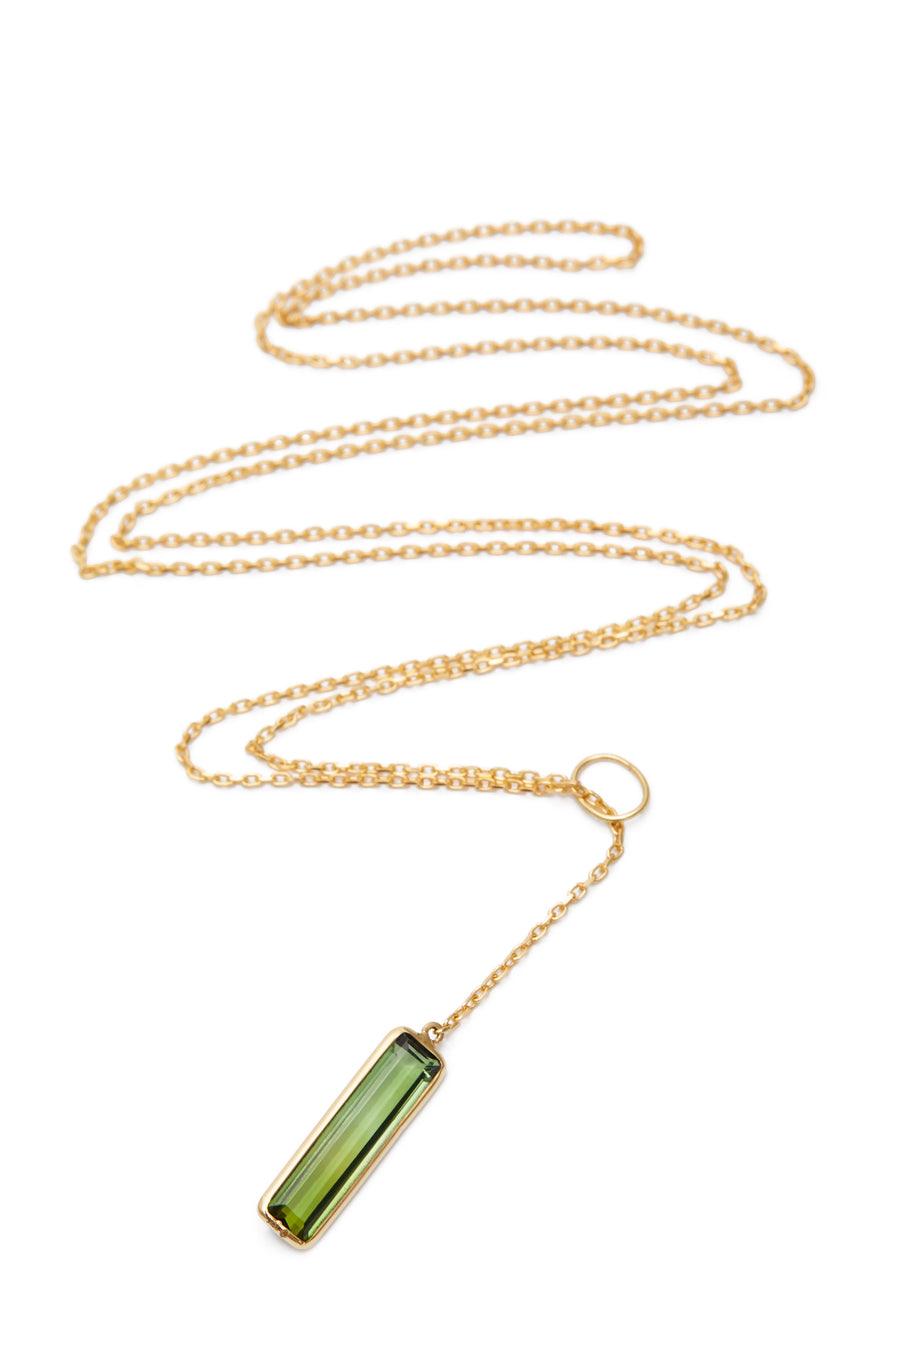 Green Tourmaline Lariat Necklace